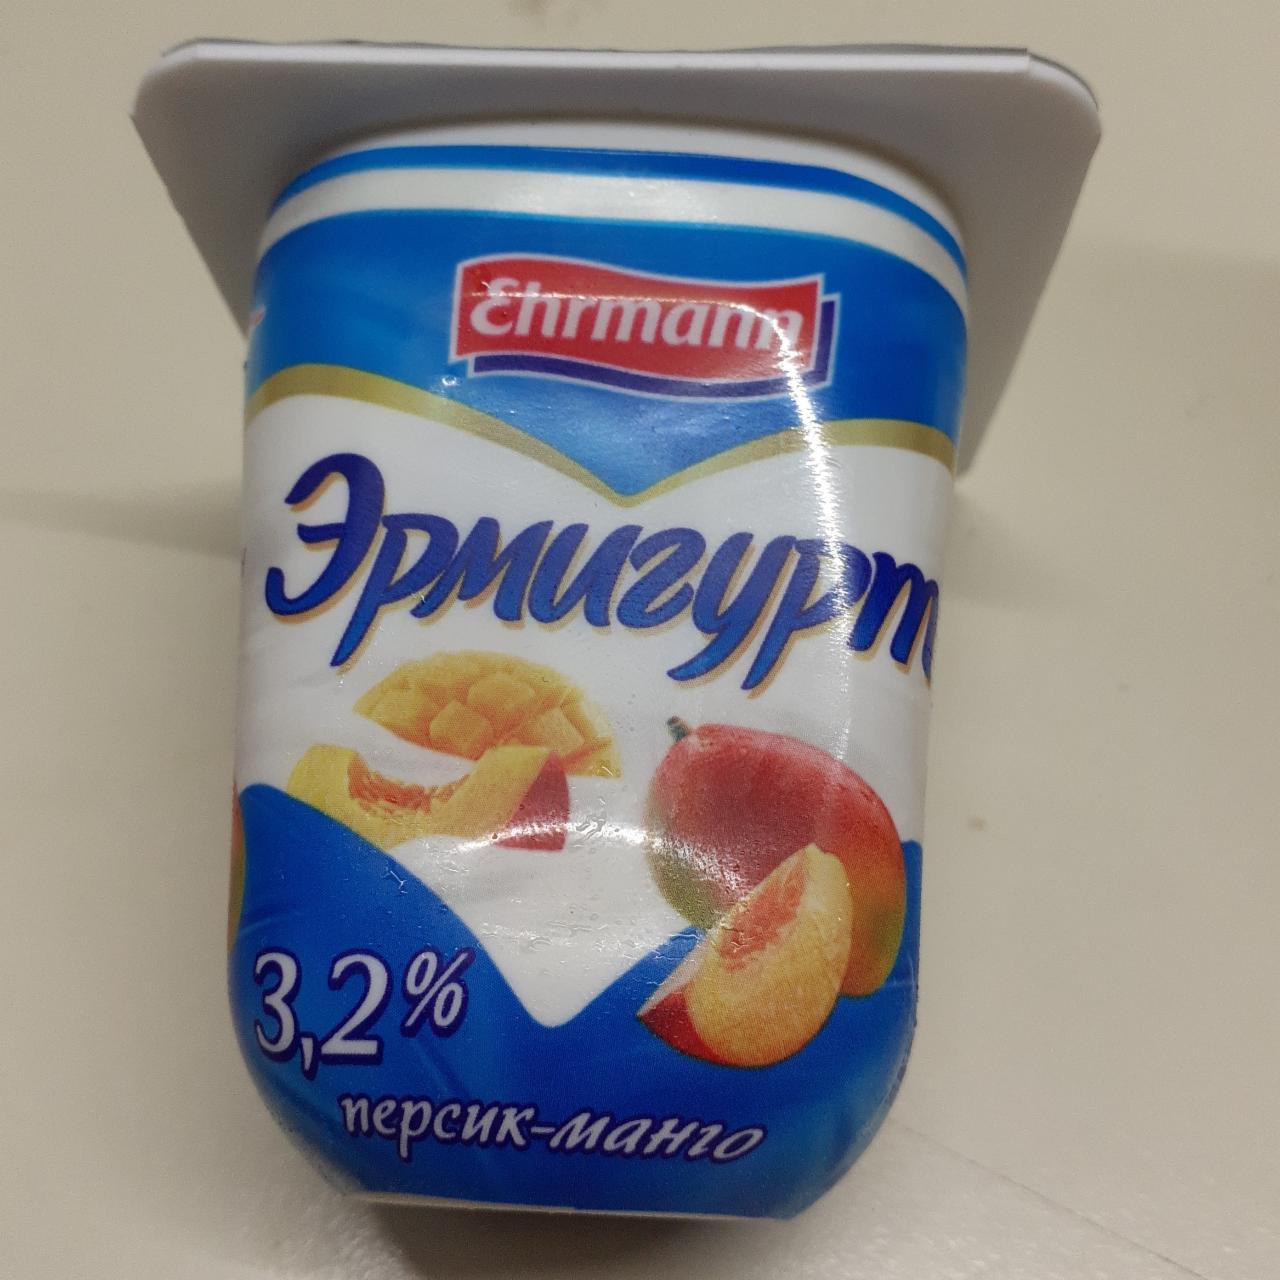 Фото - Продукт йогуртный 3.2% персик-манго Эрмигурт Ehrmann